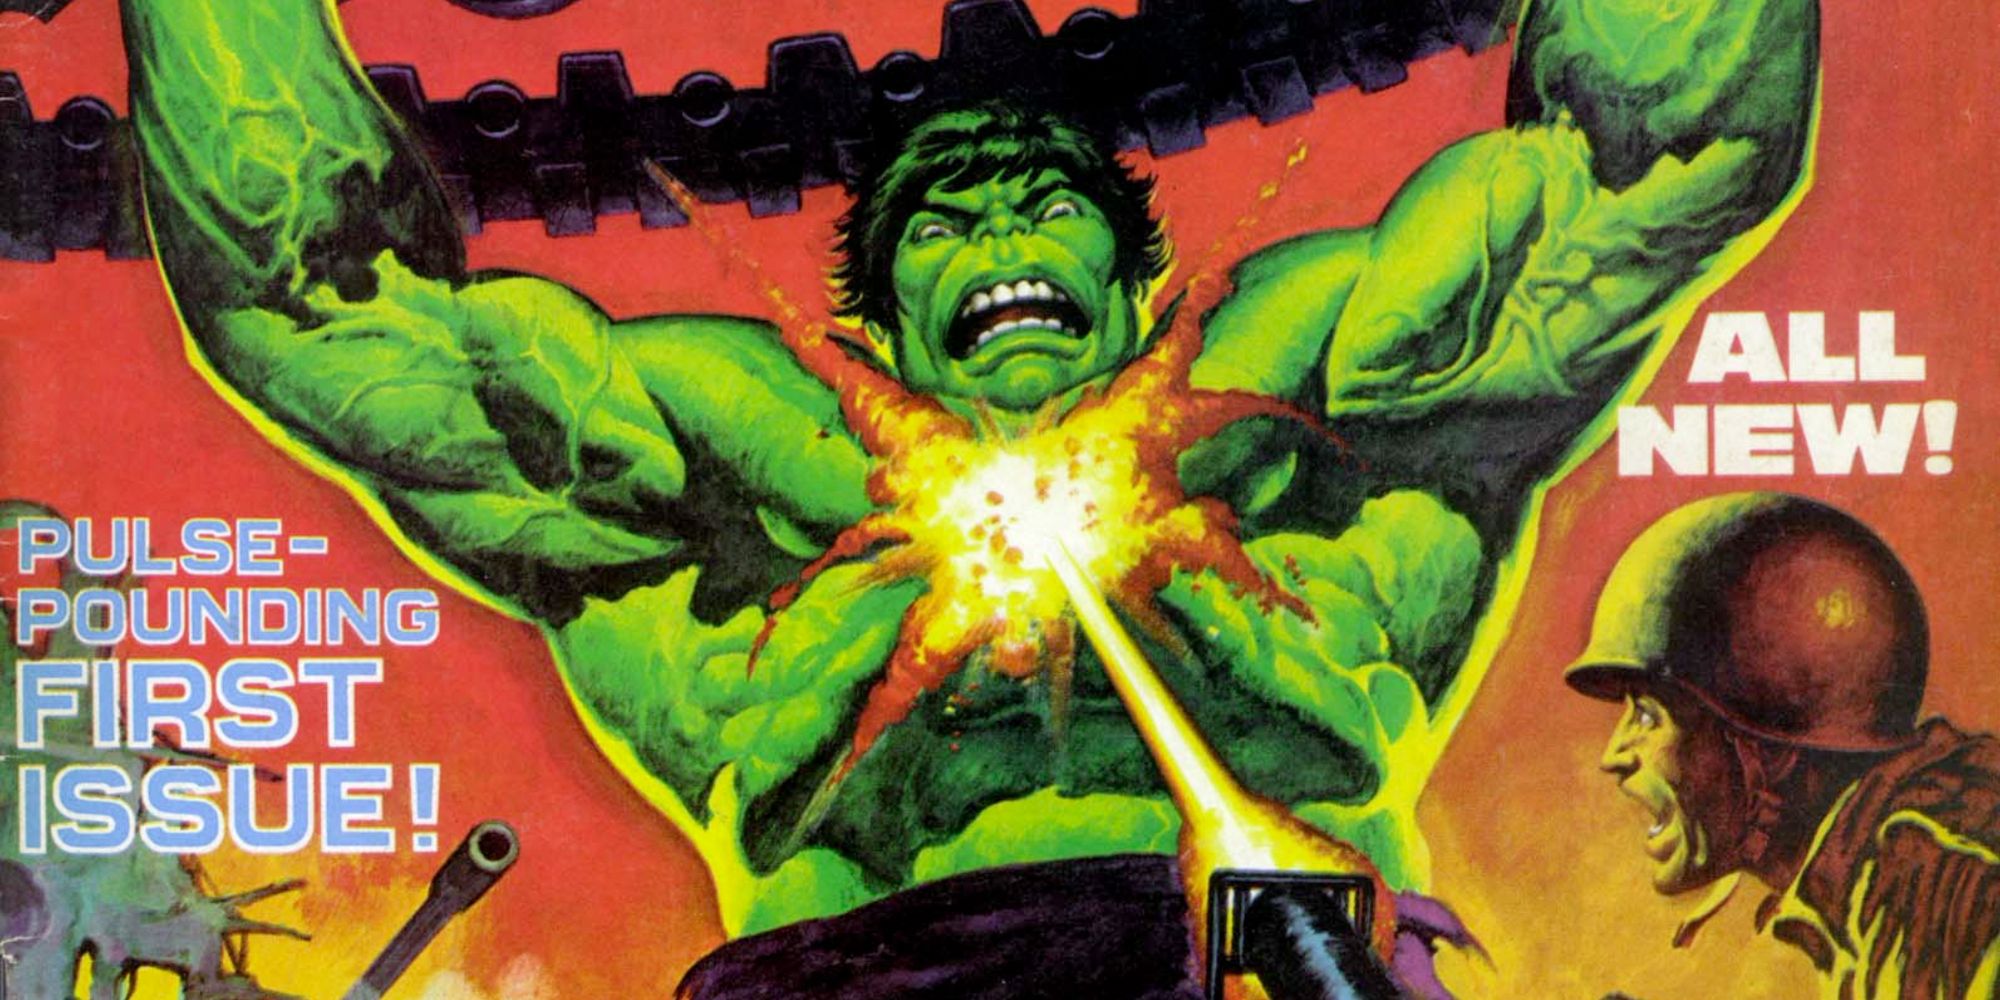 The Hulk attacks in Marvel Comics.